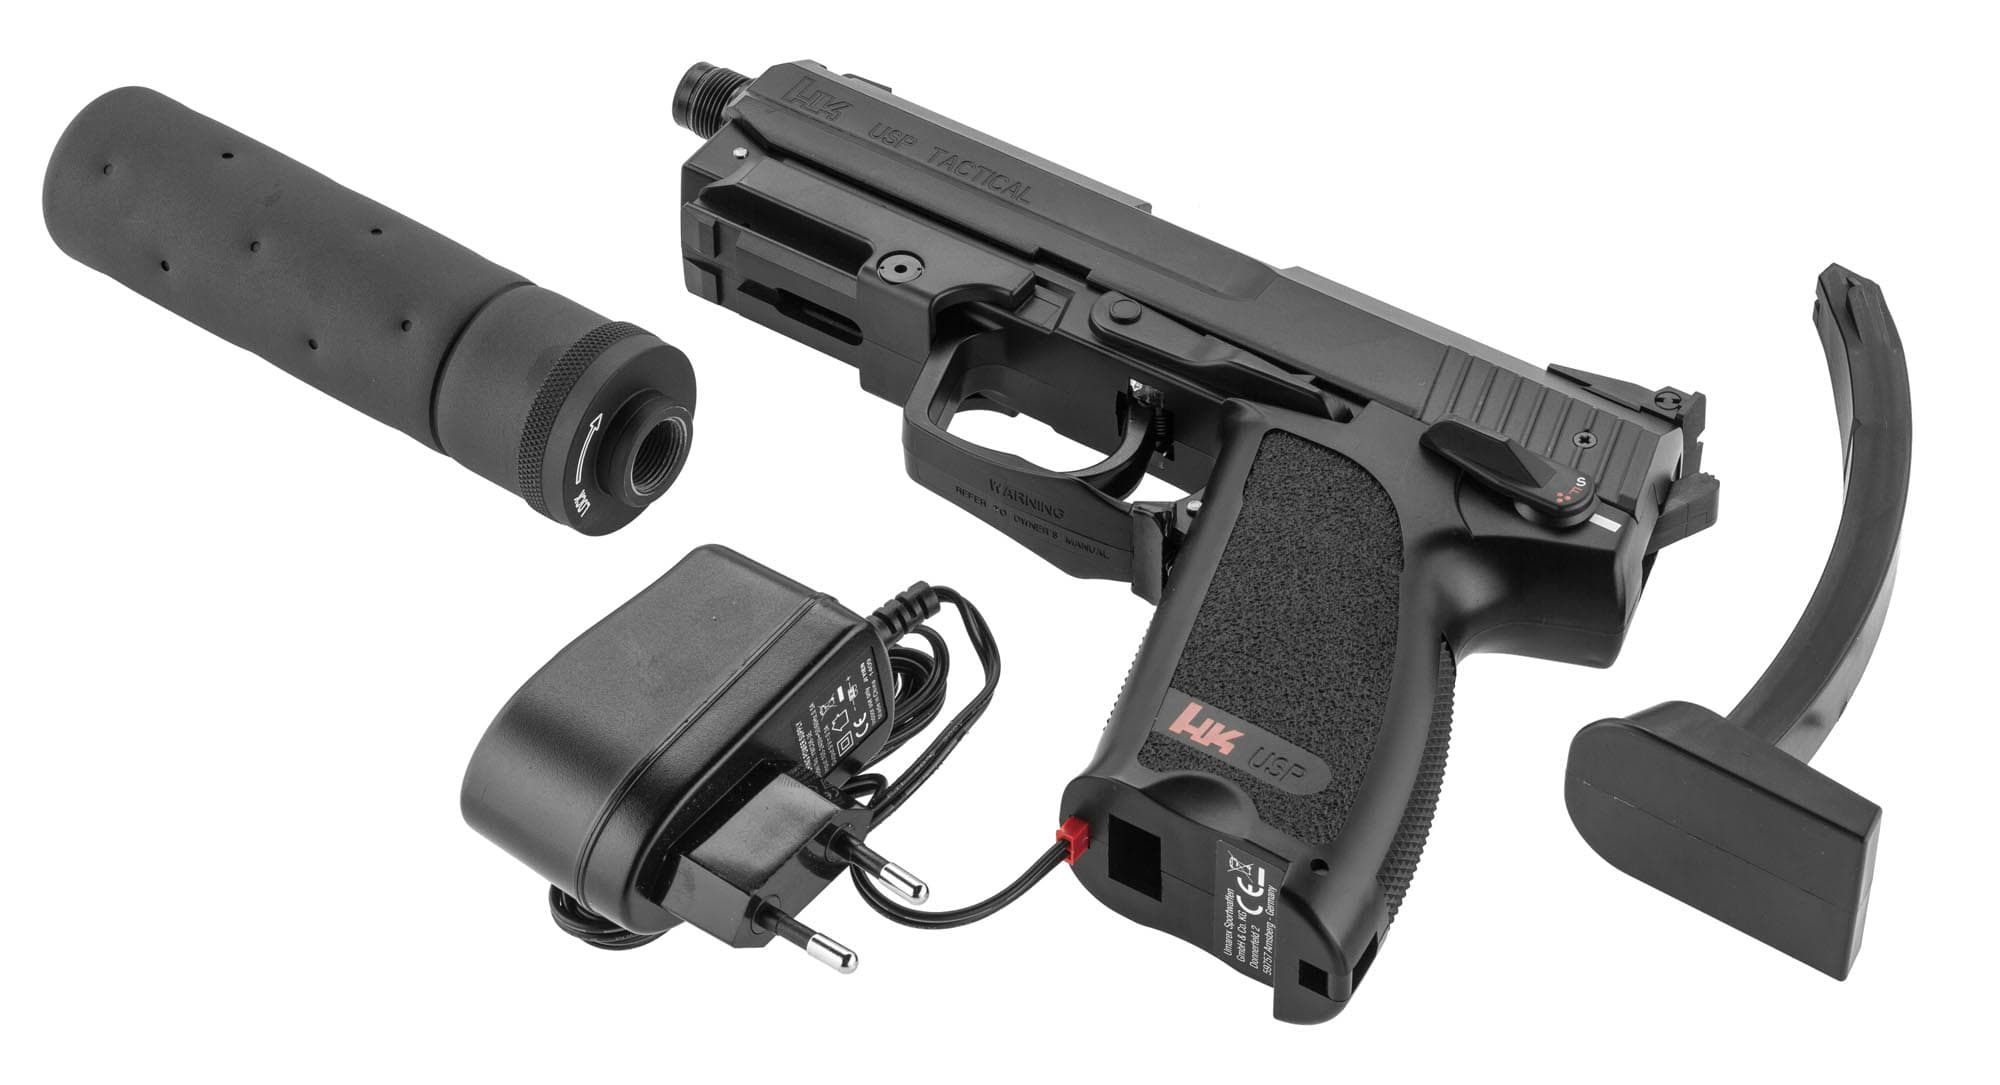 Pistola Airsoft Eléctrica HK USP Tactical, Comprar online